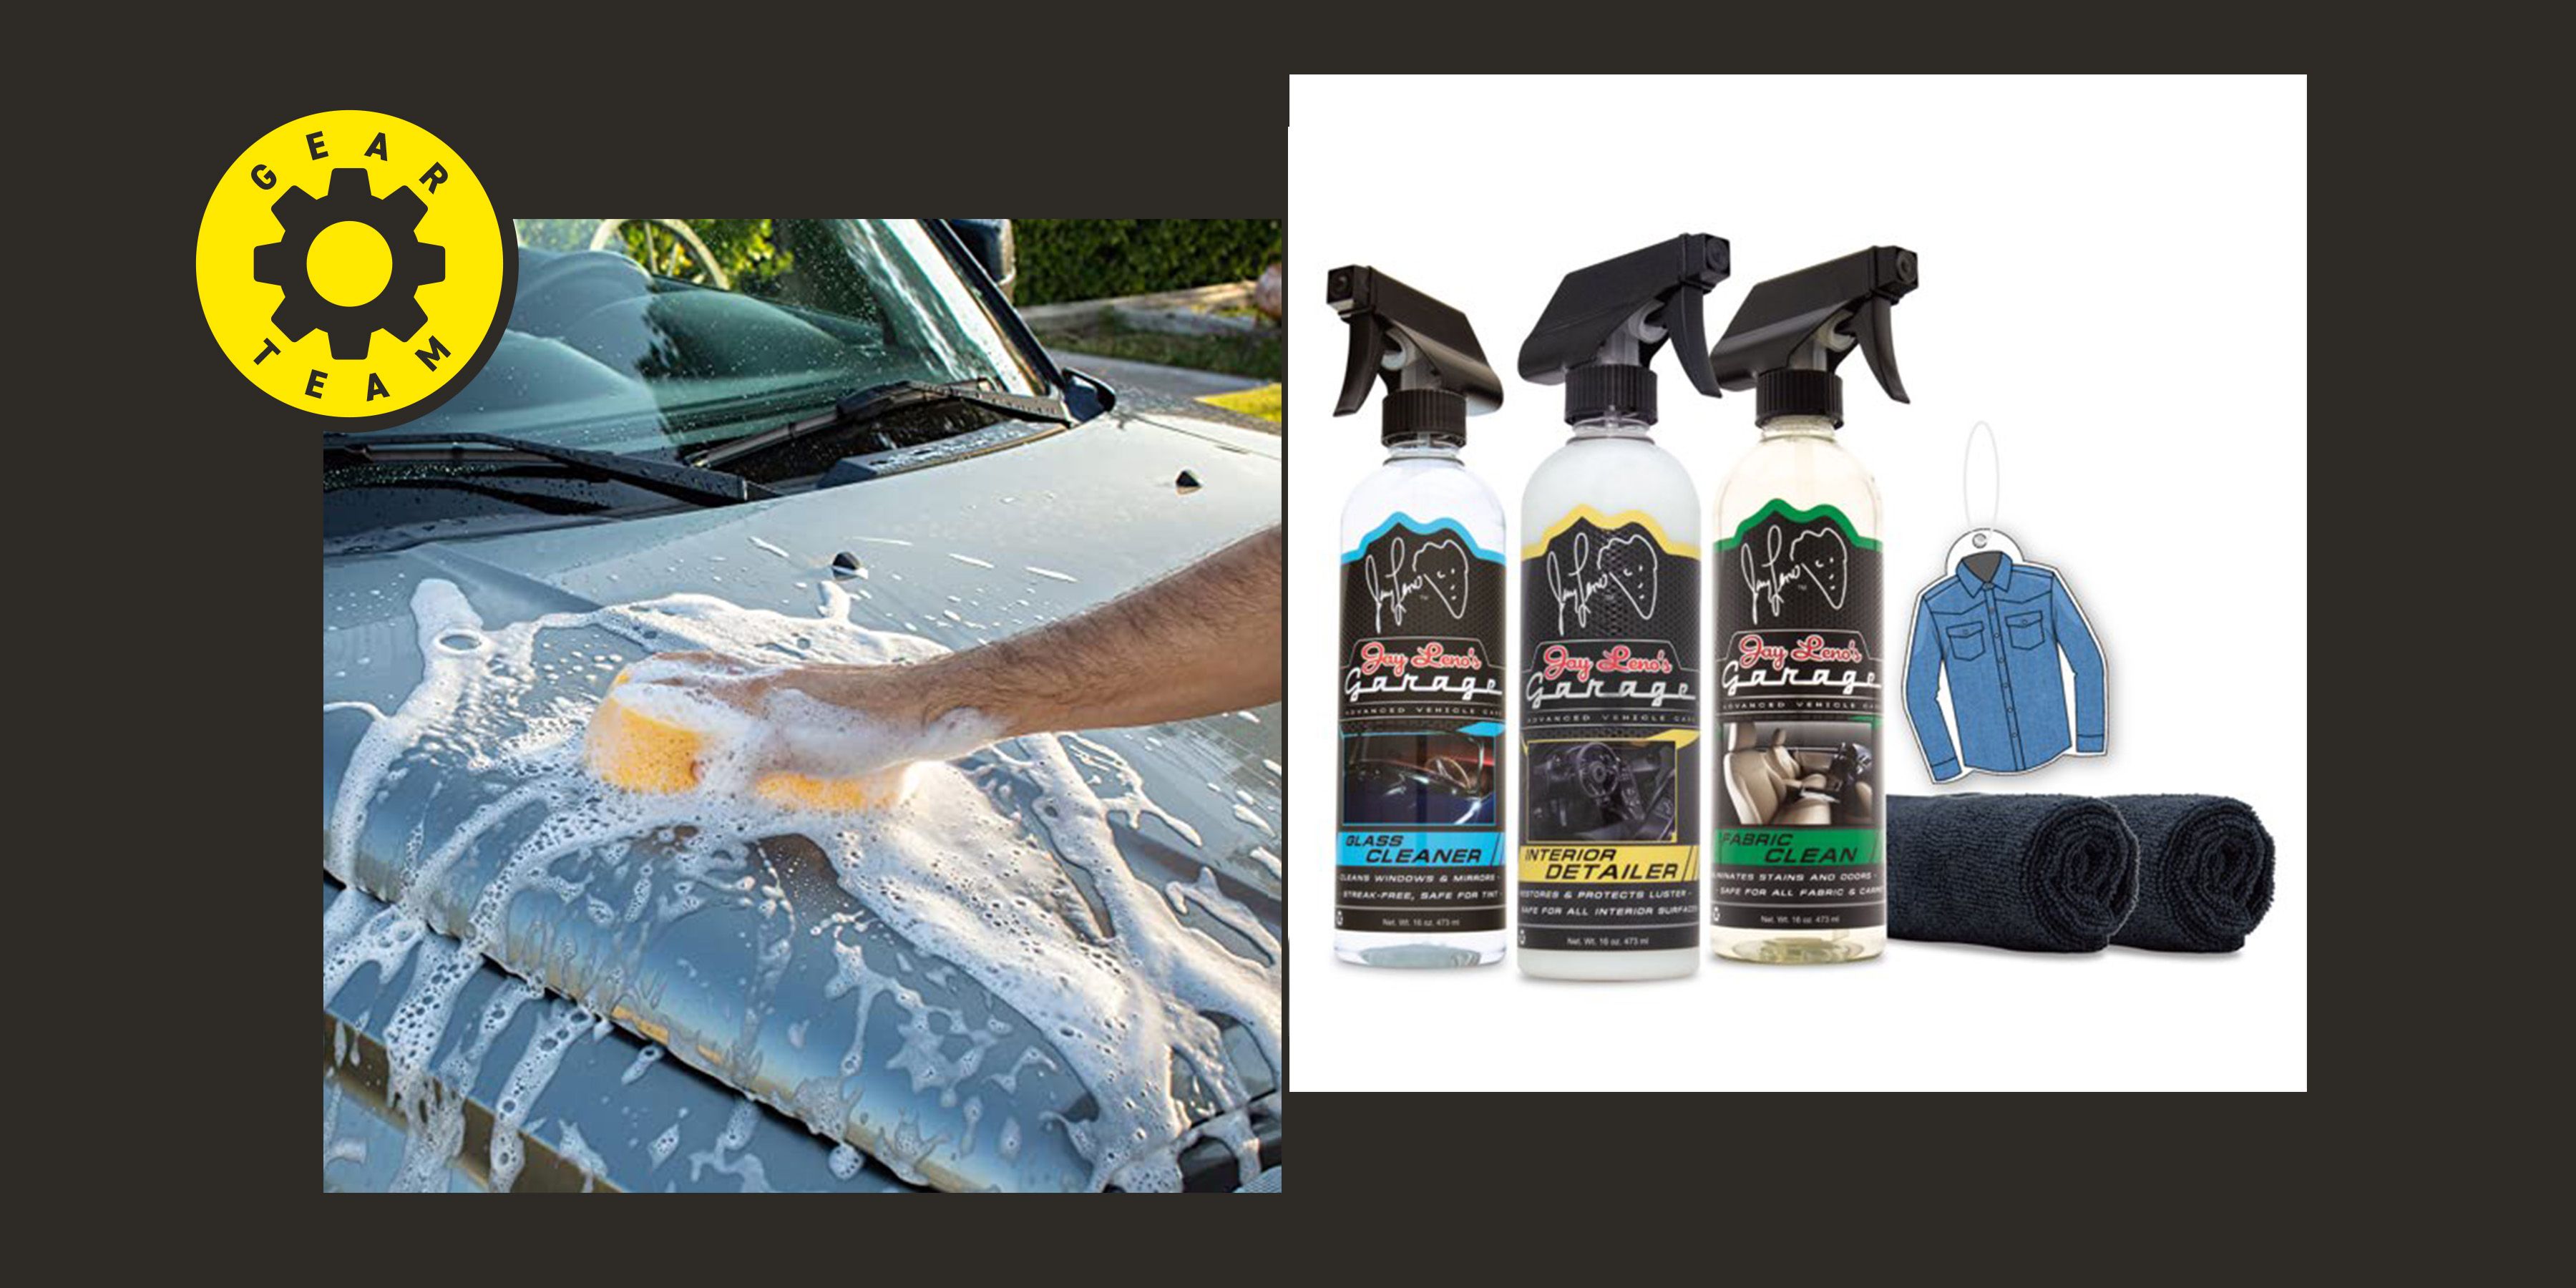  Adam's Arsenal Builder 21 Item Car Wash Kit - Our Best Value Car  Detailing Kit  Foam Gun, Car Soap, Wheel & Tire Cleaner, Total Interior  Cleaner, Glass Cleaner, Tire Shine